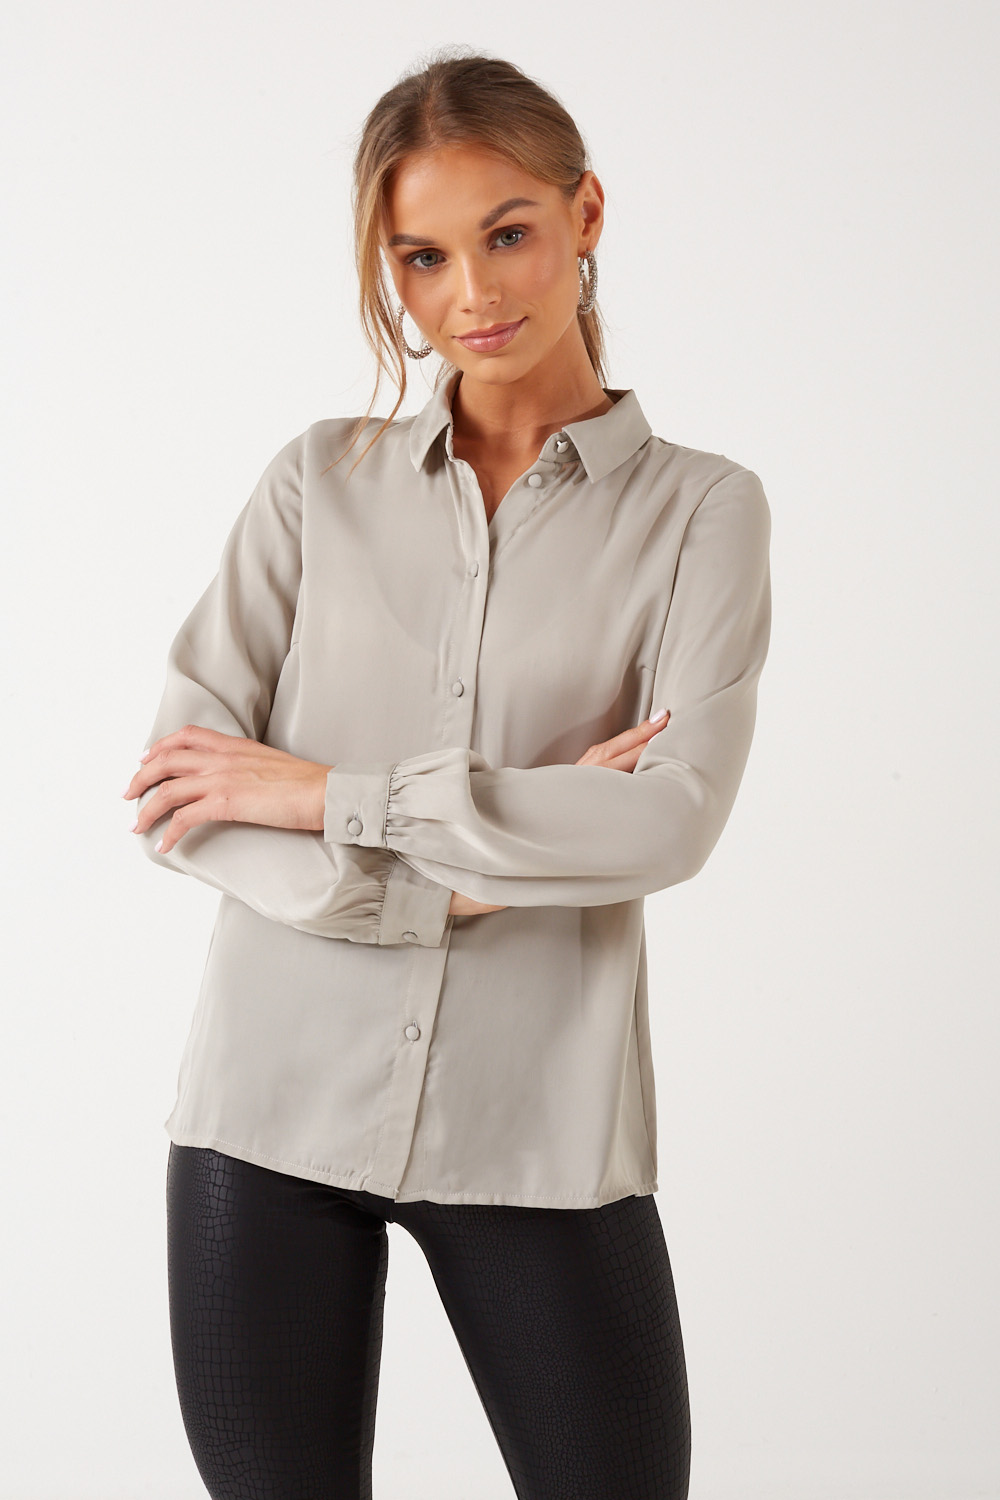 Pieces Megan Shirt Top in Grey | iCLOTHING - iCLOTHING